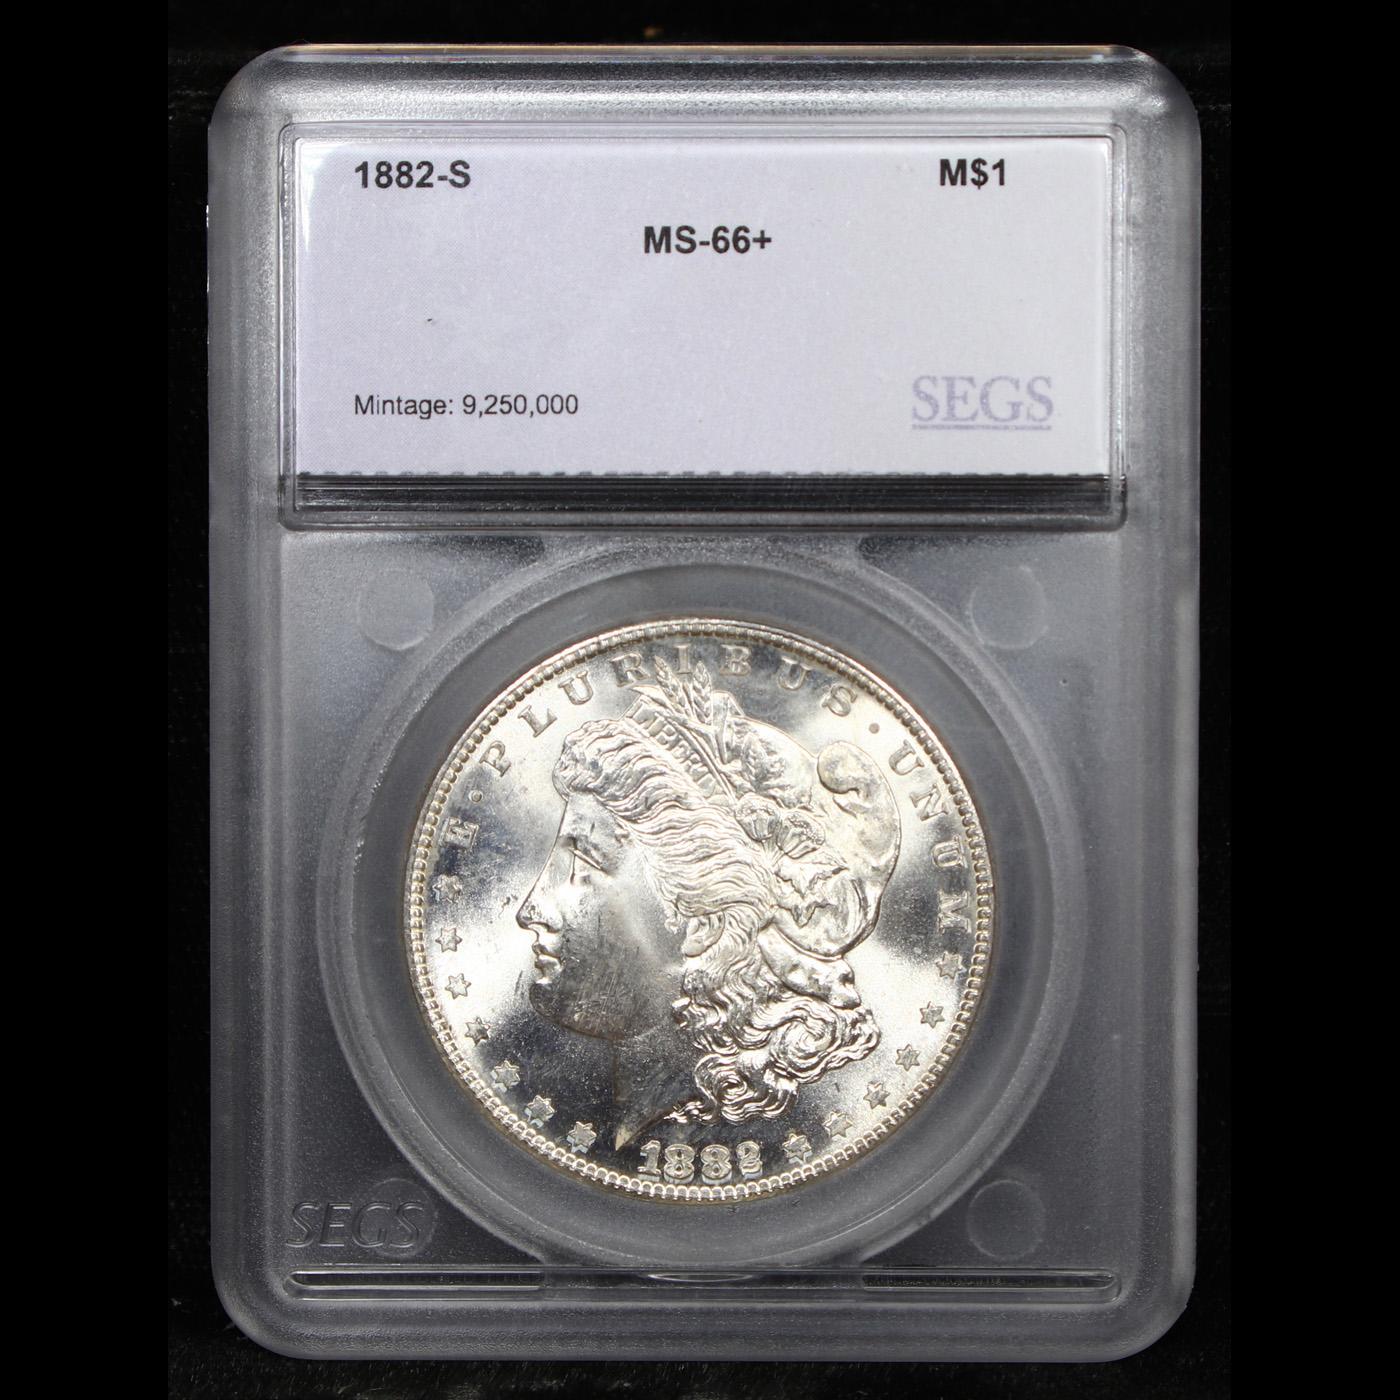 ***Auction Highlight*** 1882-s Morgan Dollar $1 Graded ms66+ By SEGS (fc)